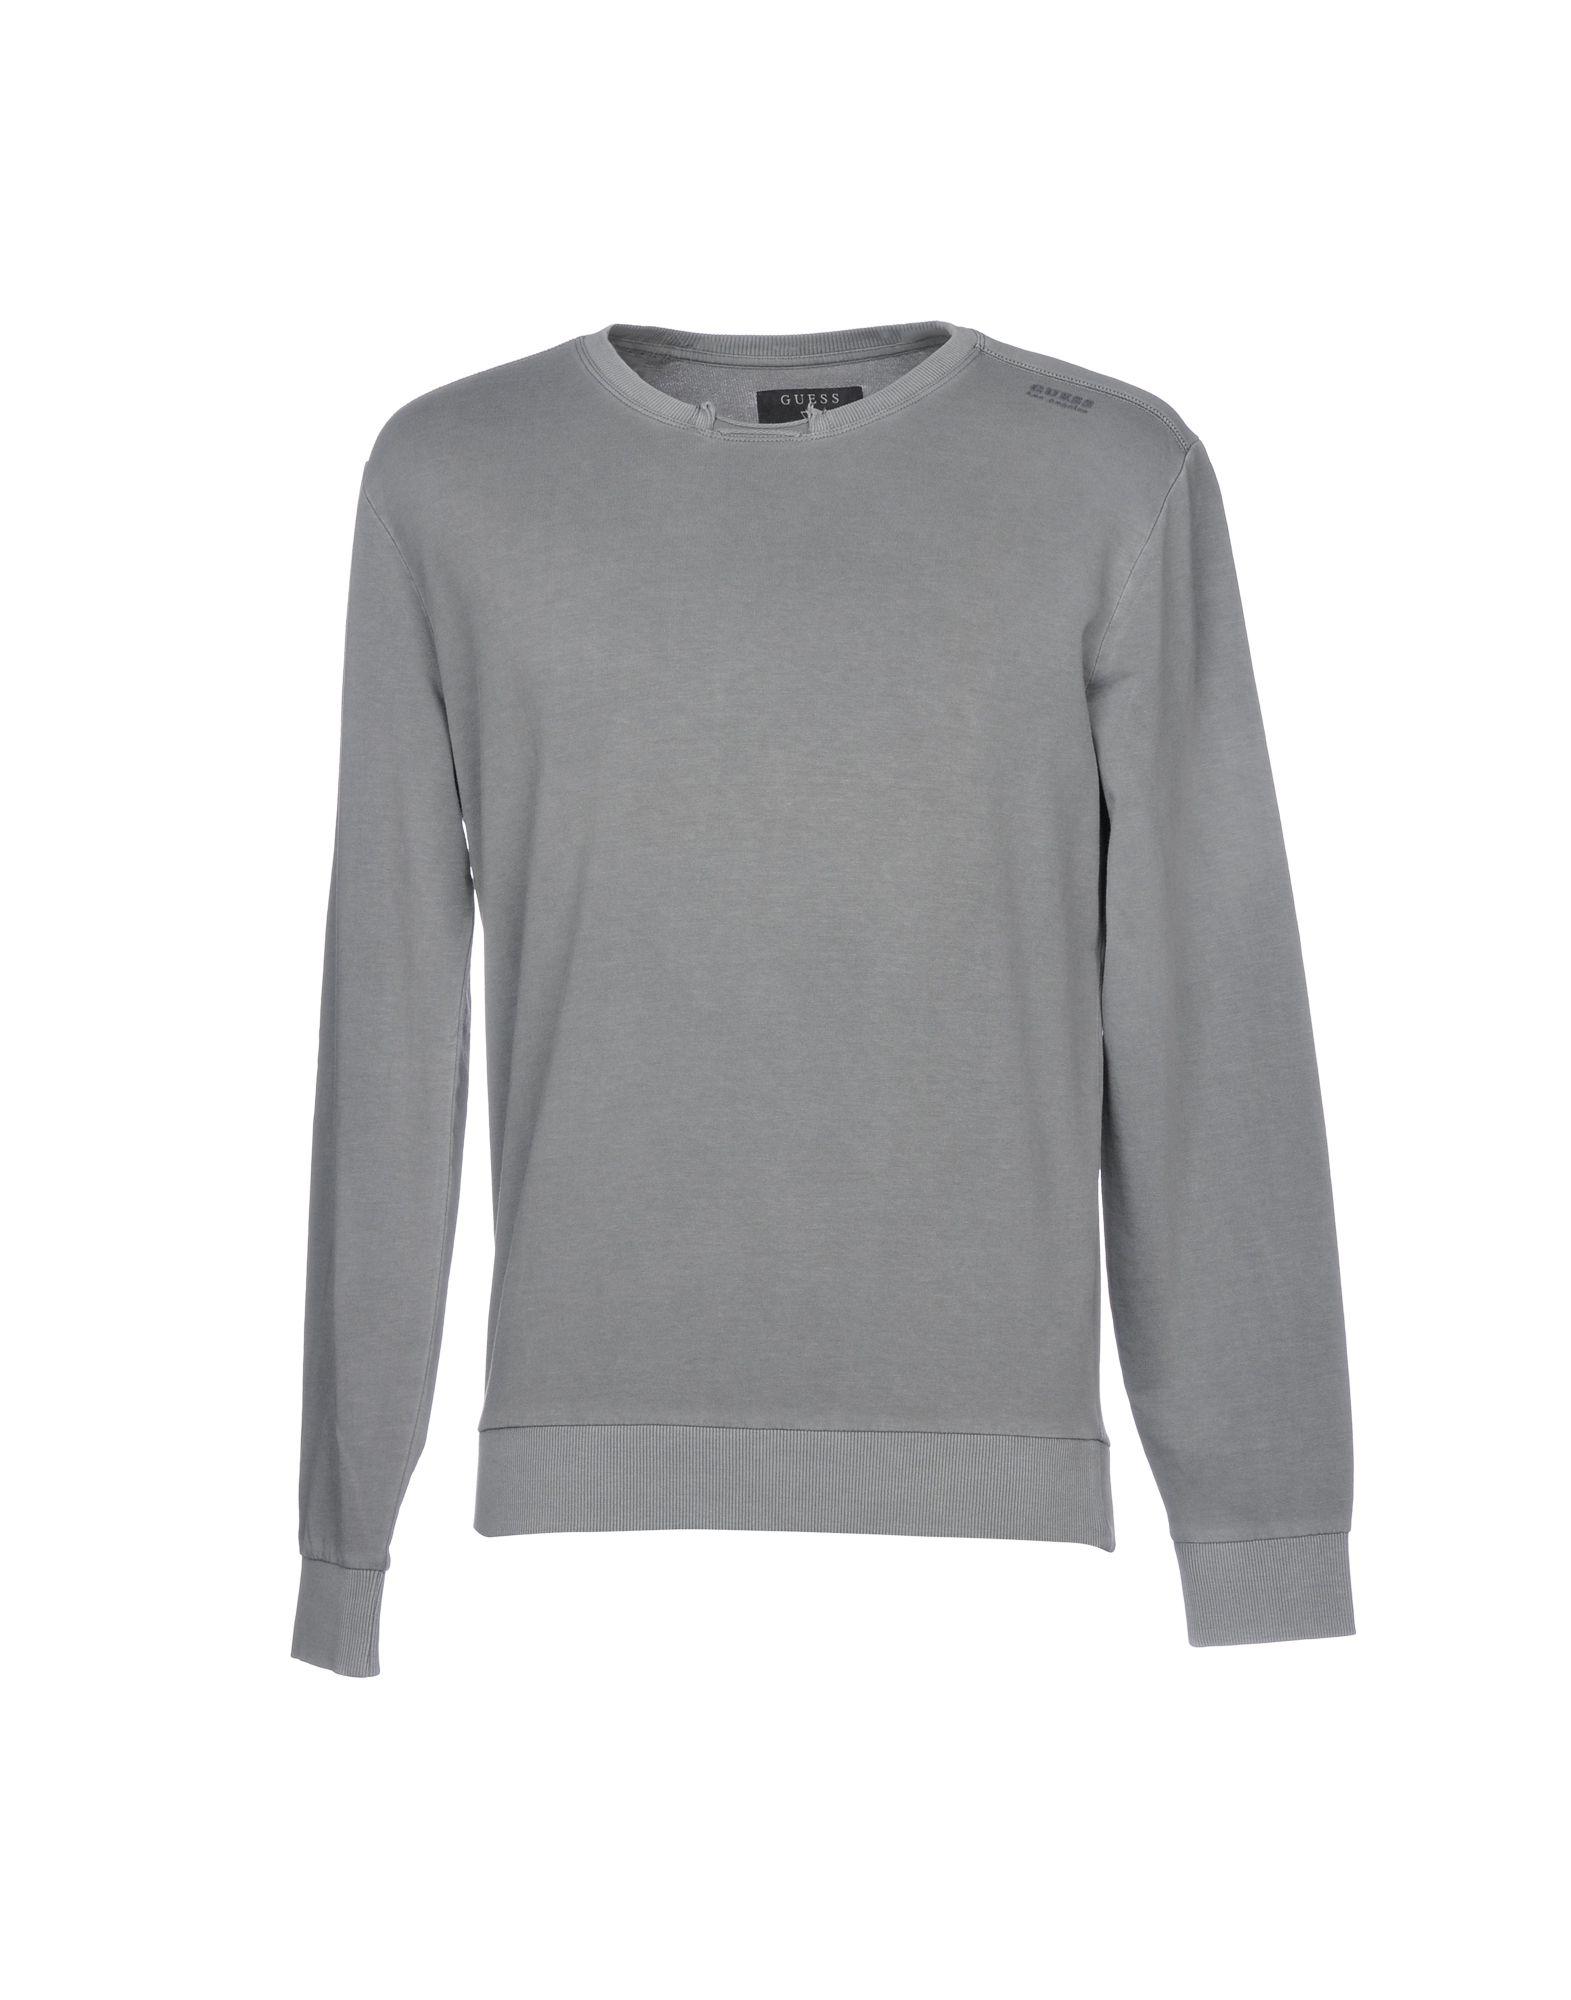 guess sweatshirt grey